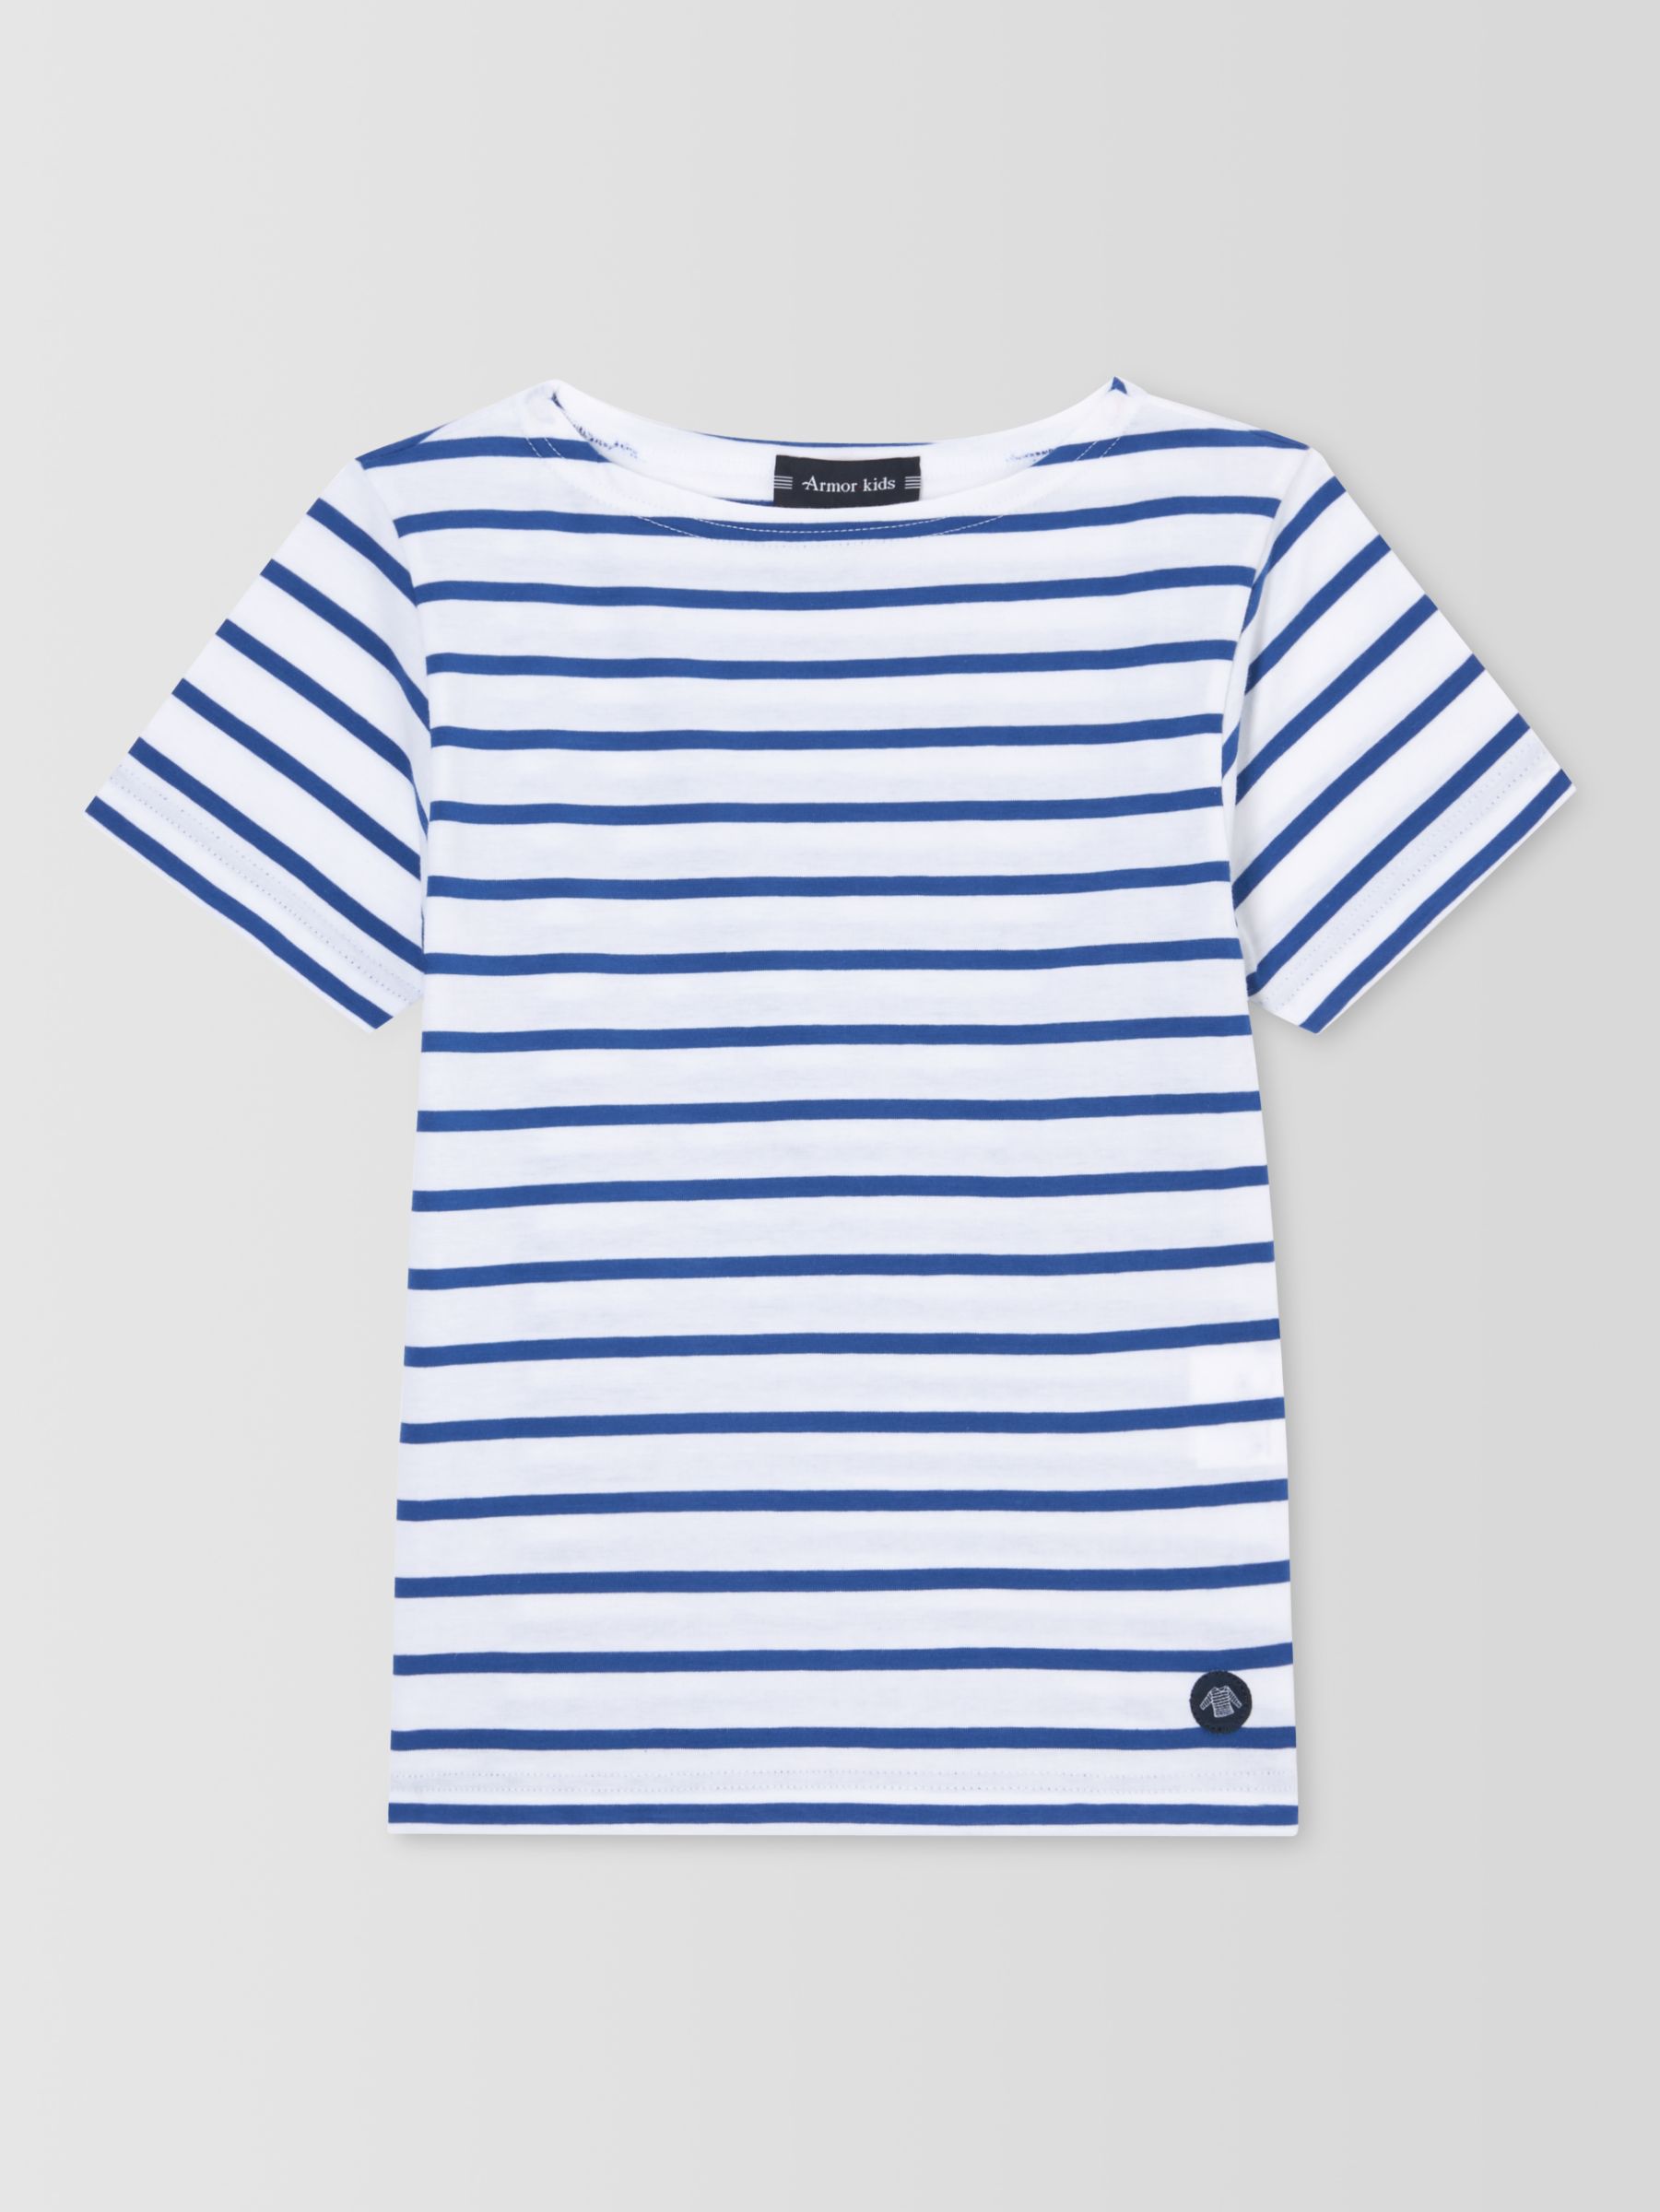 Armor Lux Kids' Short Sleeve Stripe T-Shirt, Blue/White, 8 years